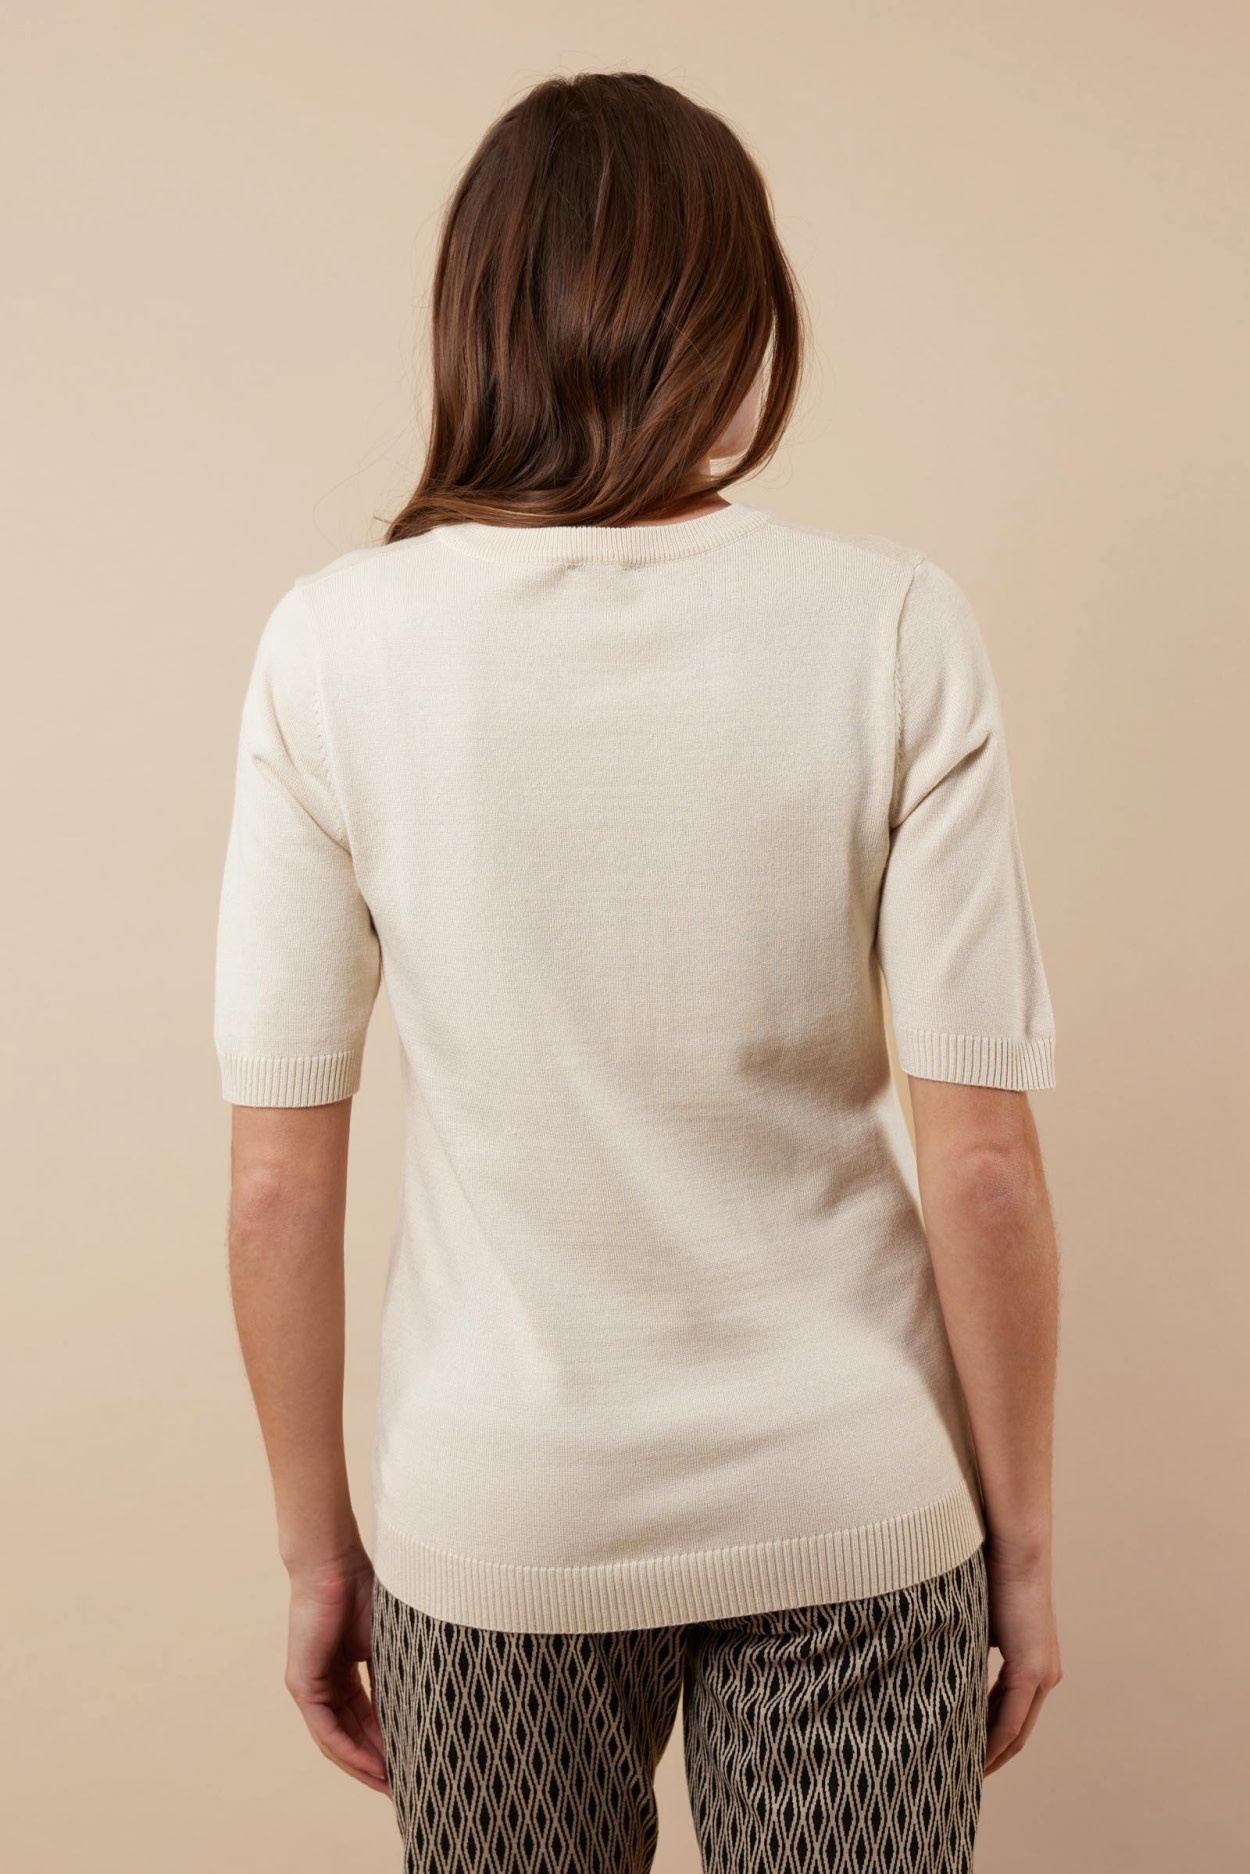 Tianna Sweater - Ivory